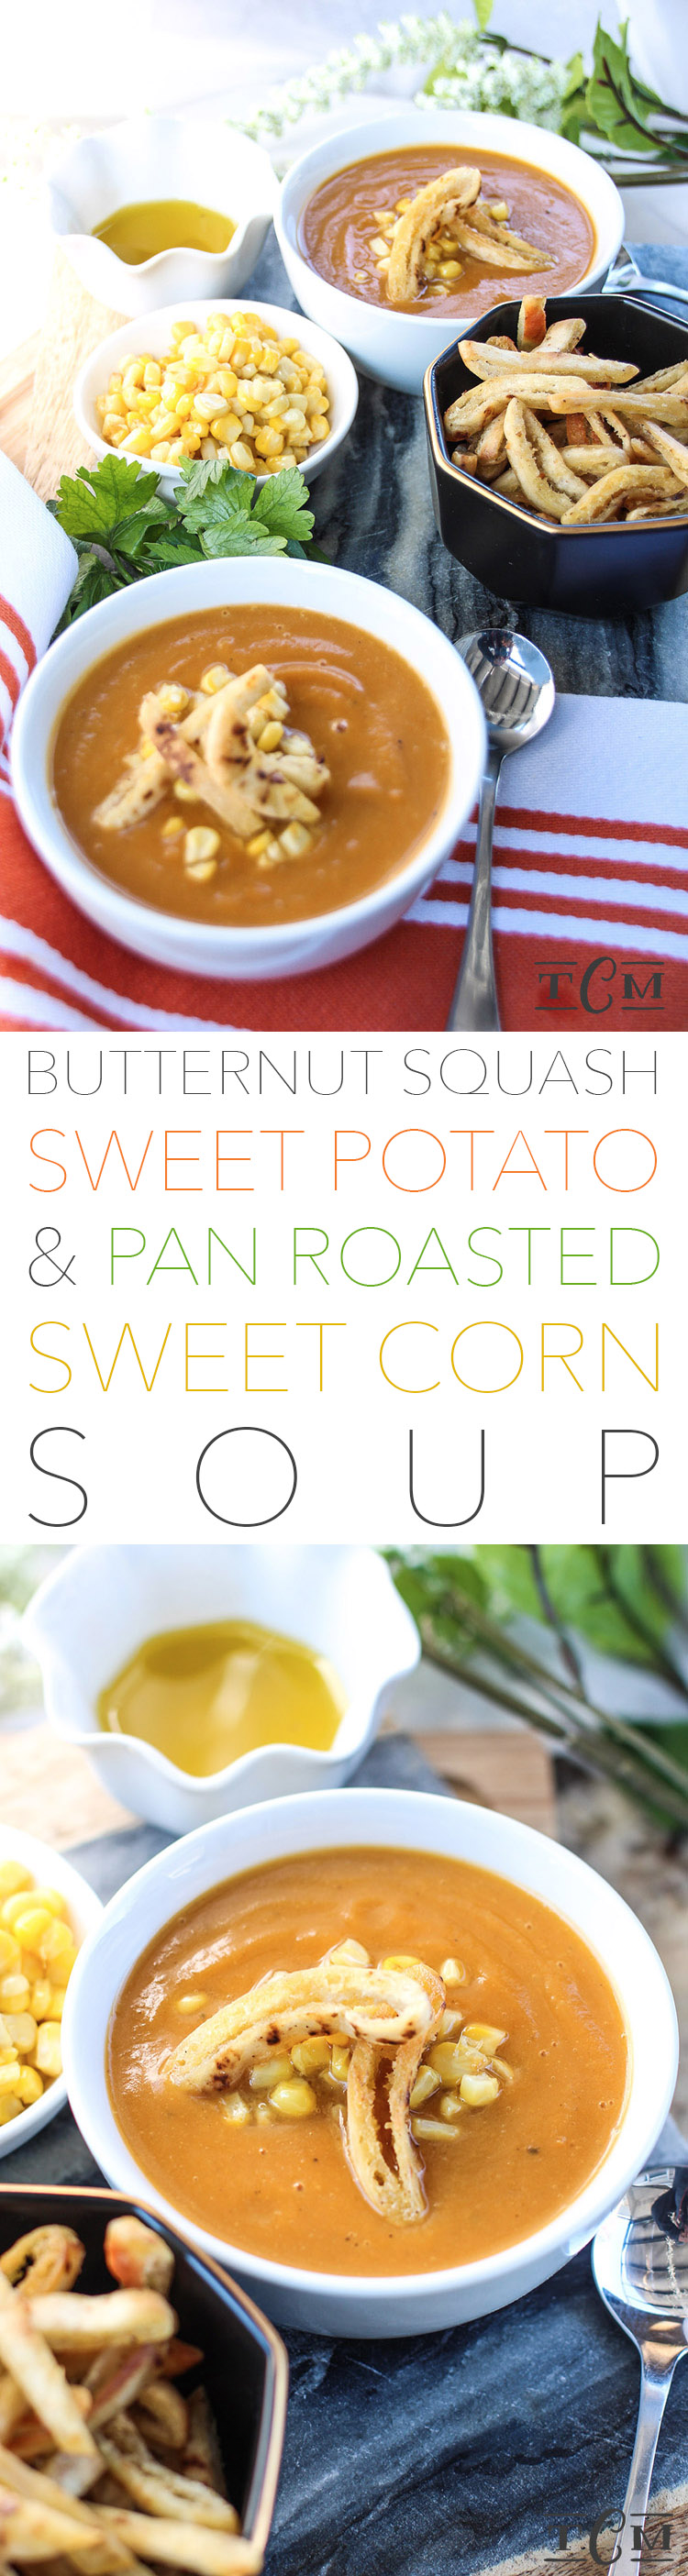 http://thecottagemarket.com/wp-content/uploads/2017/03/Butternut-Squash-Sweet-Potato-Roasted-Sweet-Corn-Soup-tower-1.jpg